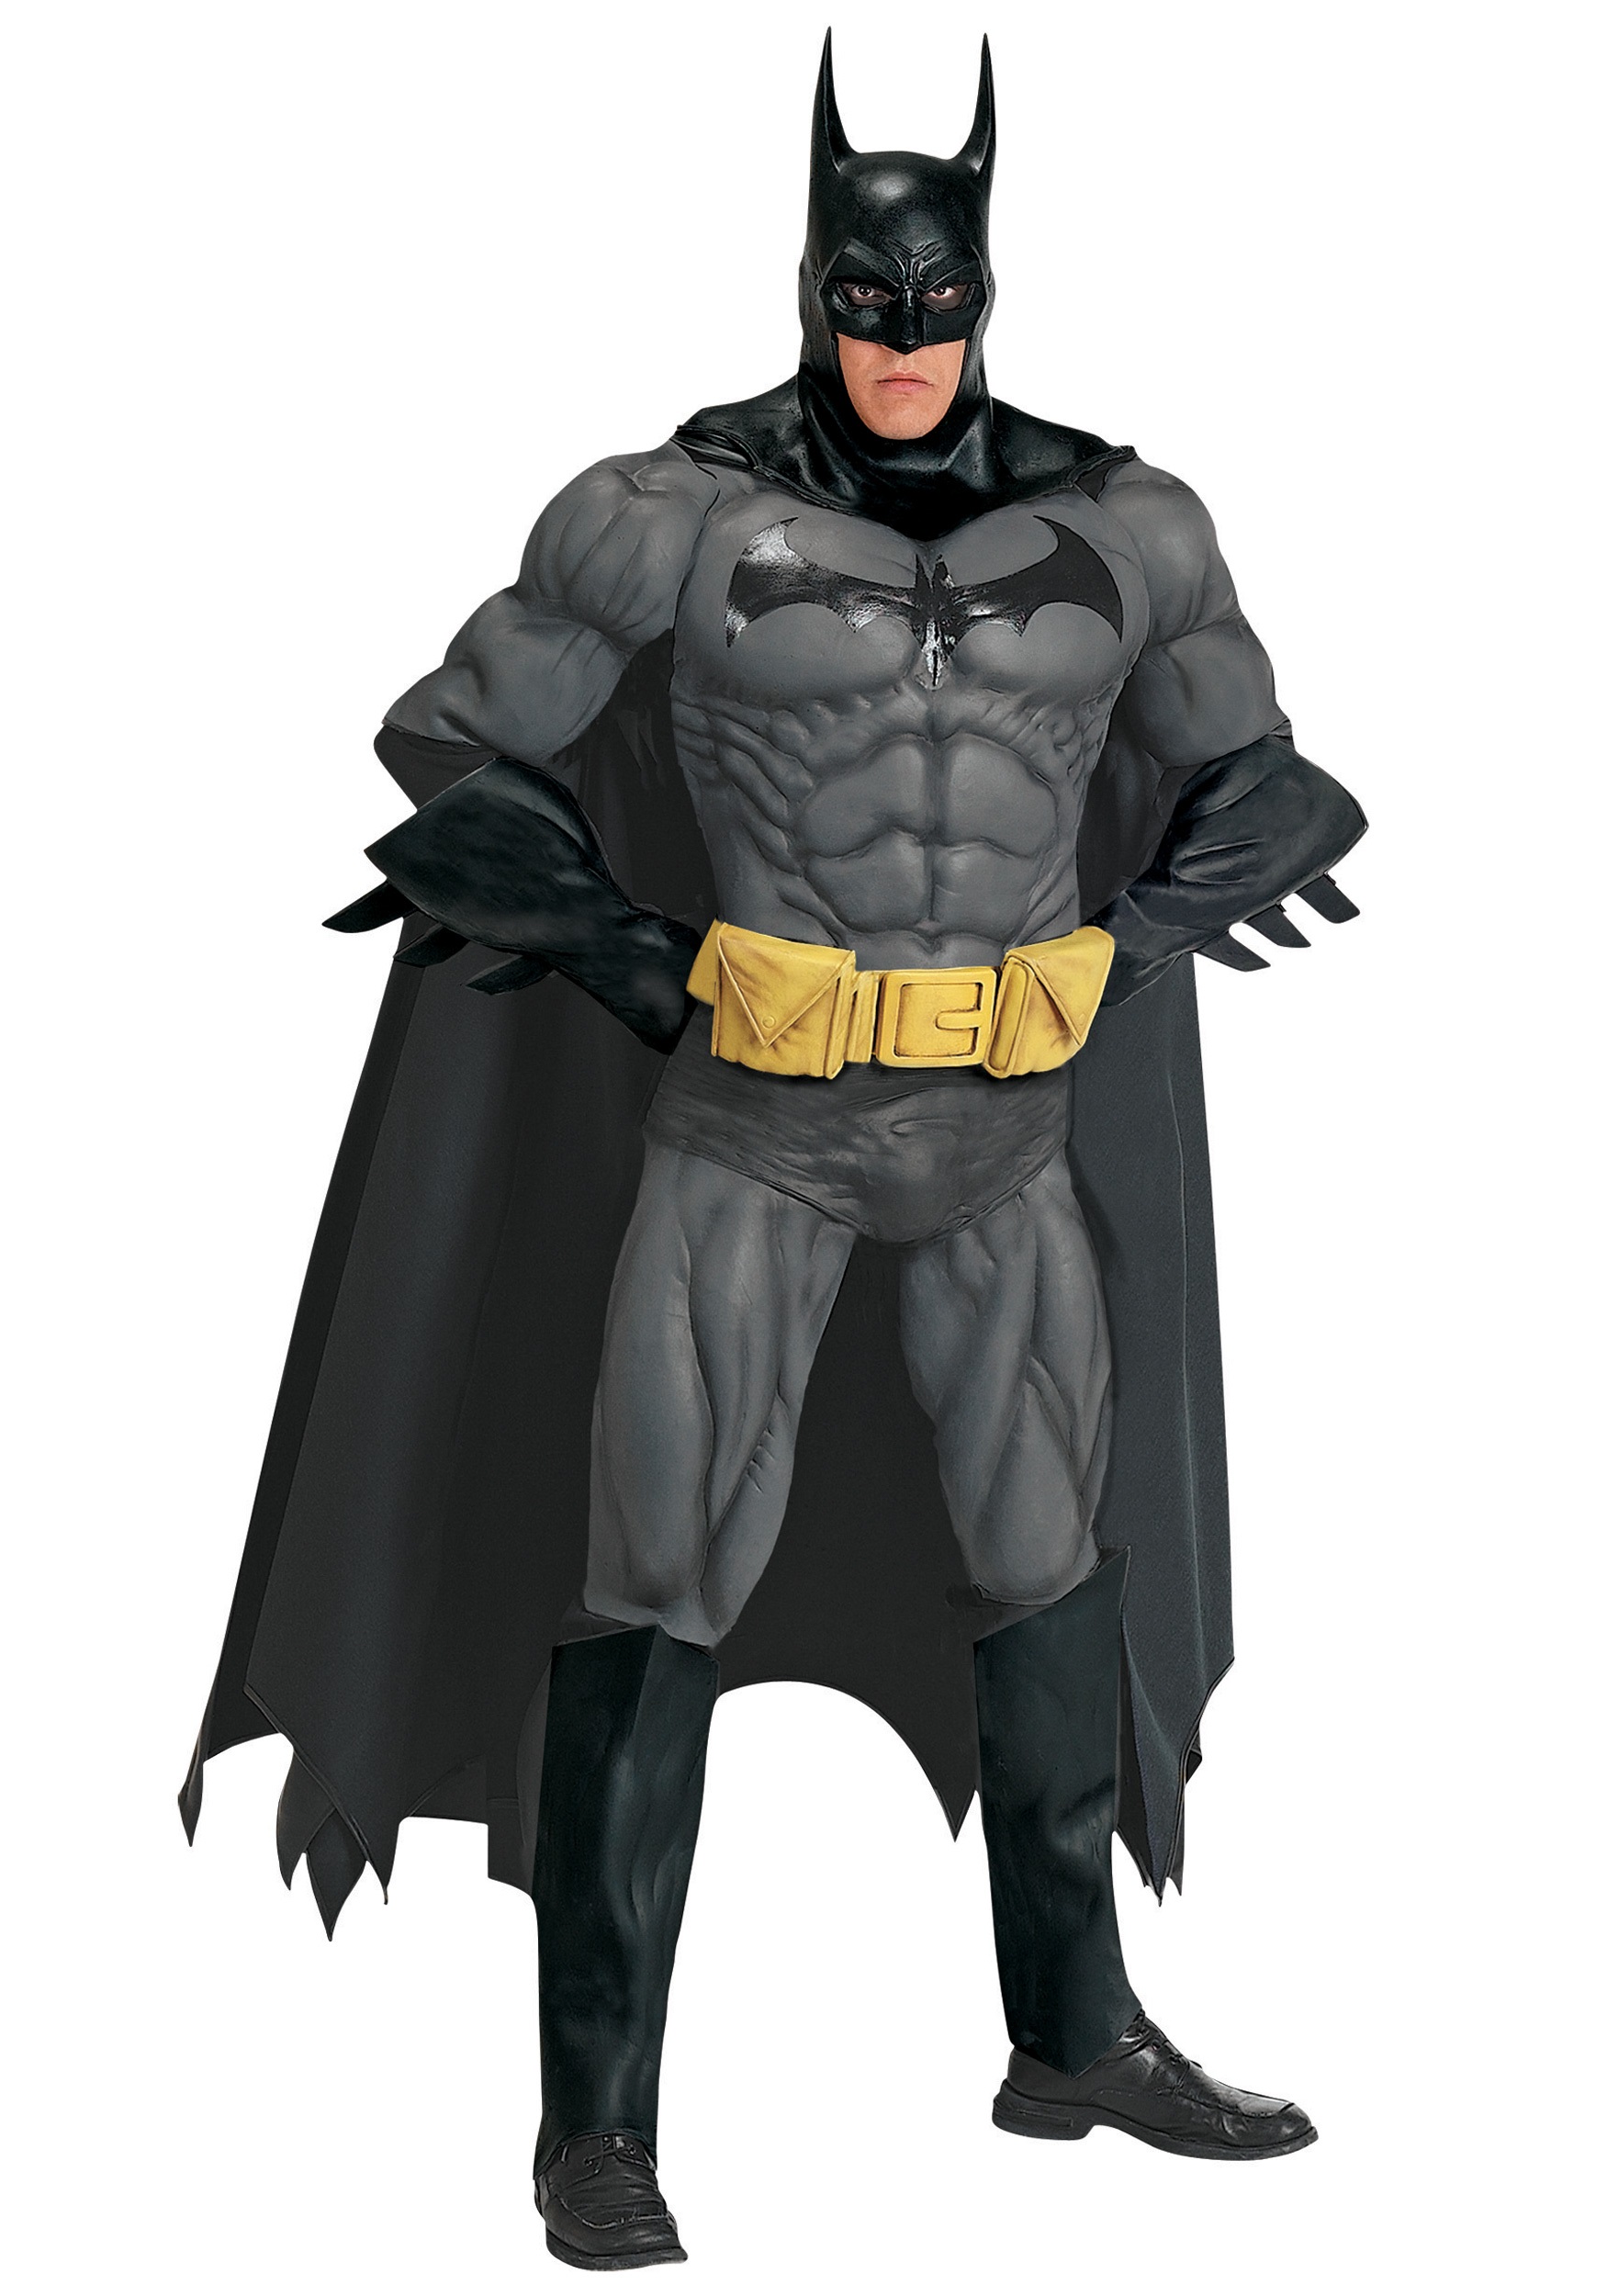 Batman цена. Бэтмен в сером костюме. Бэтмен 2022 костюм. Карнавальный костюм Rubie's Бэтмен. Костюм Инсайдера Бэтмен.